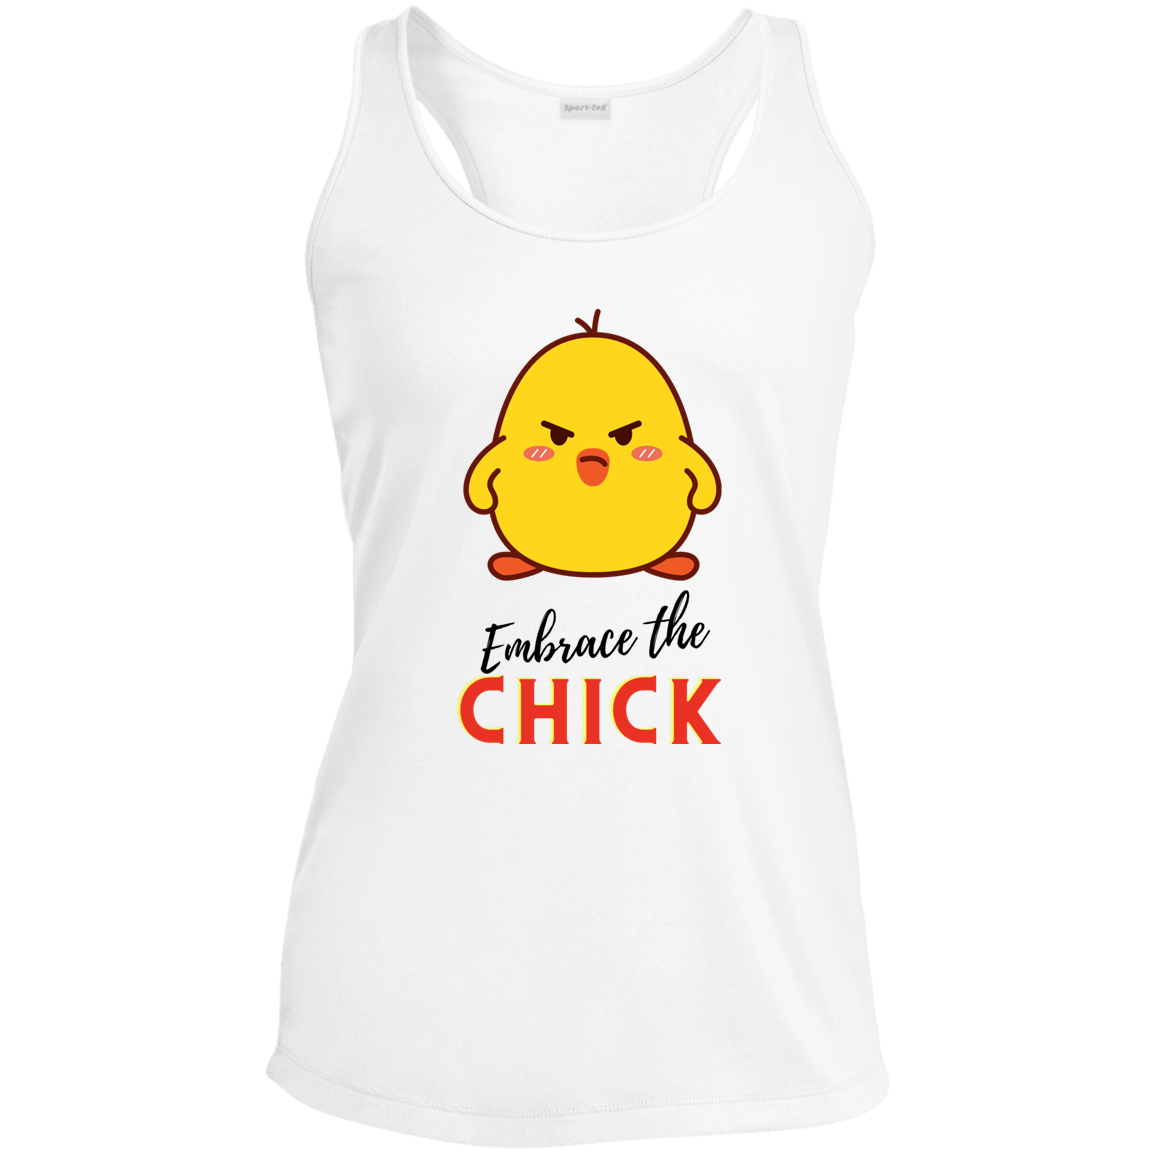 Embrace the Chick - Women's, Ladies' Performance Racerback Tank Top